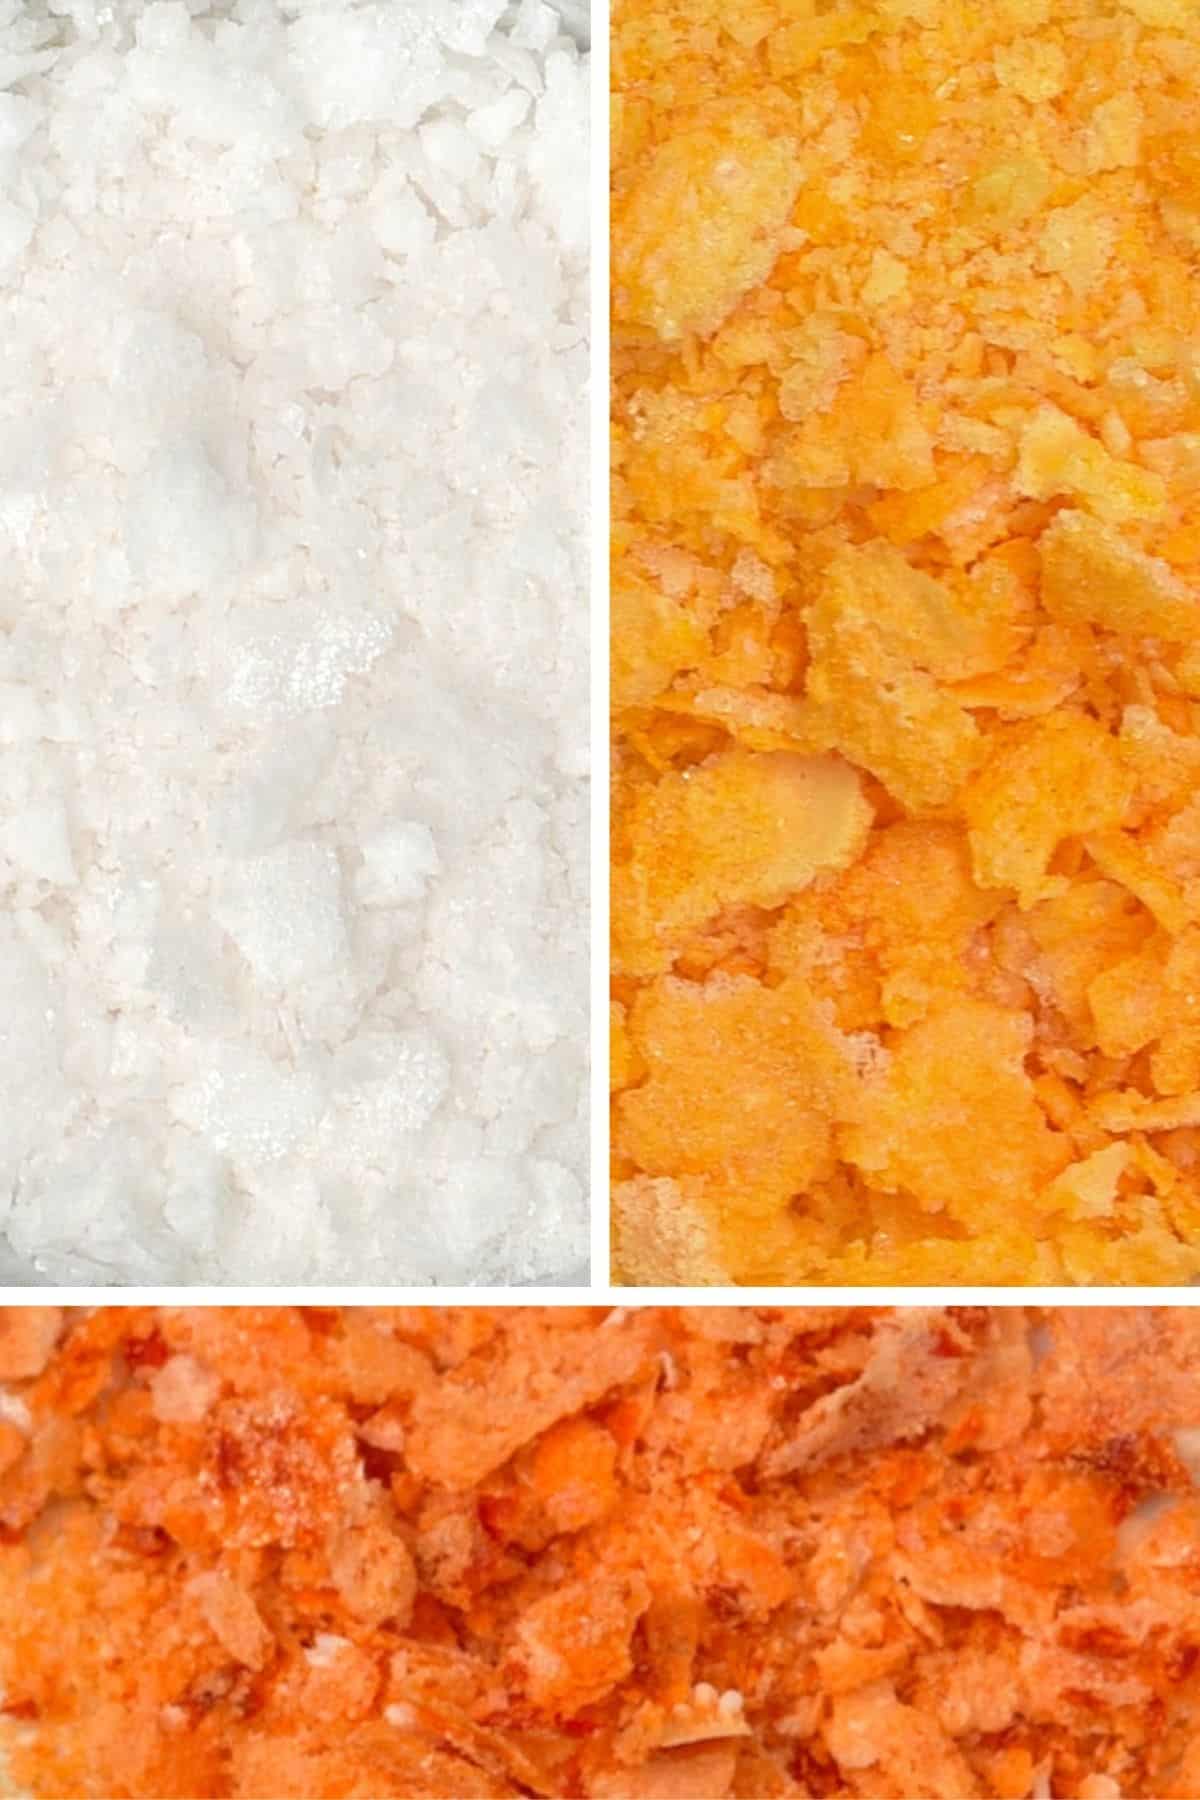 Three types of homemade flaky salt